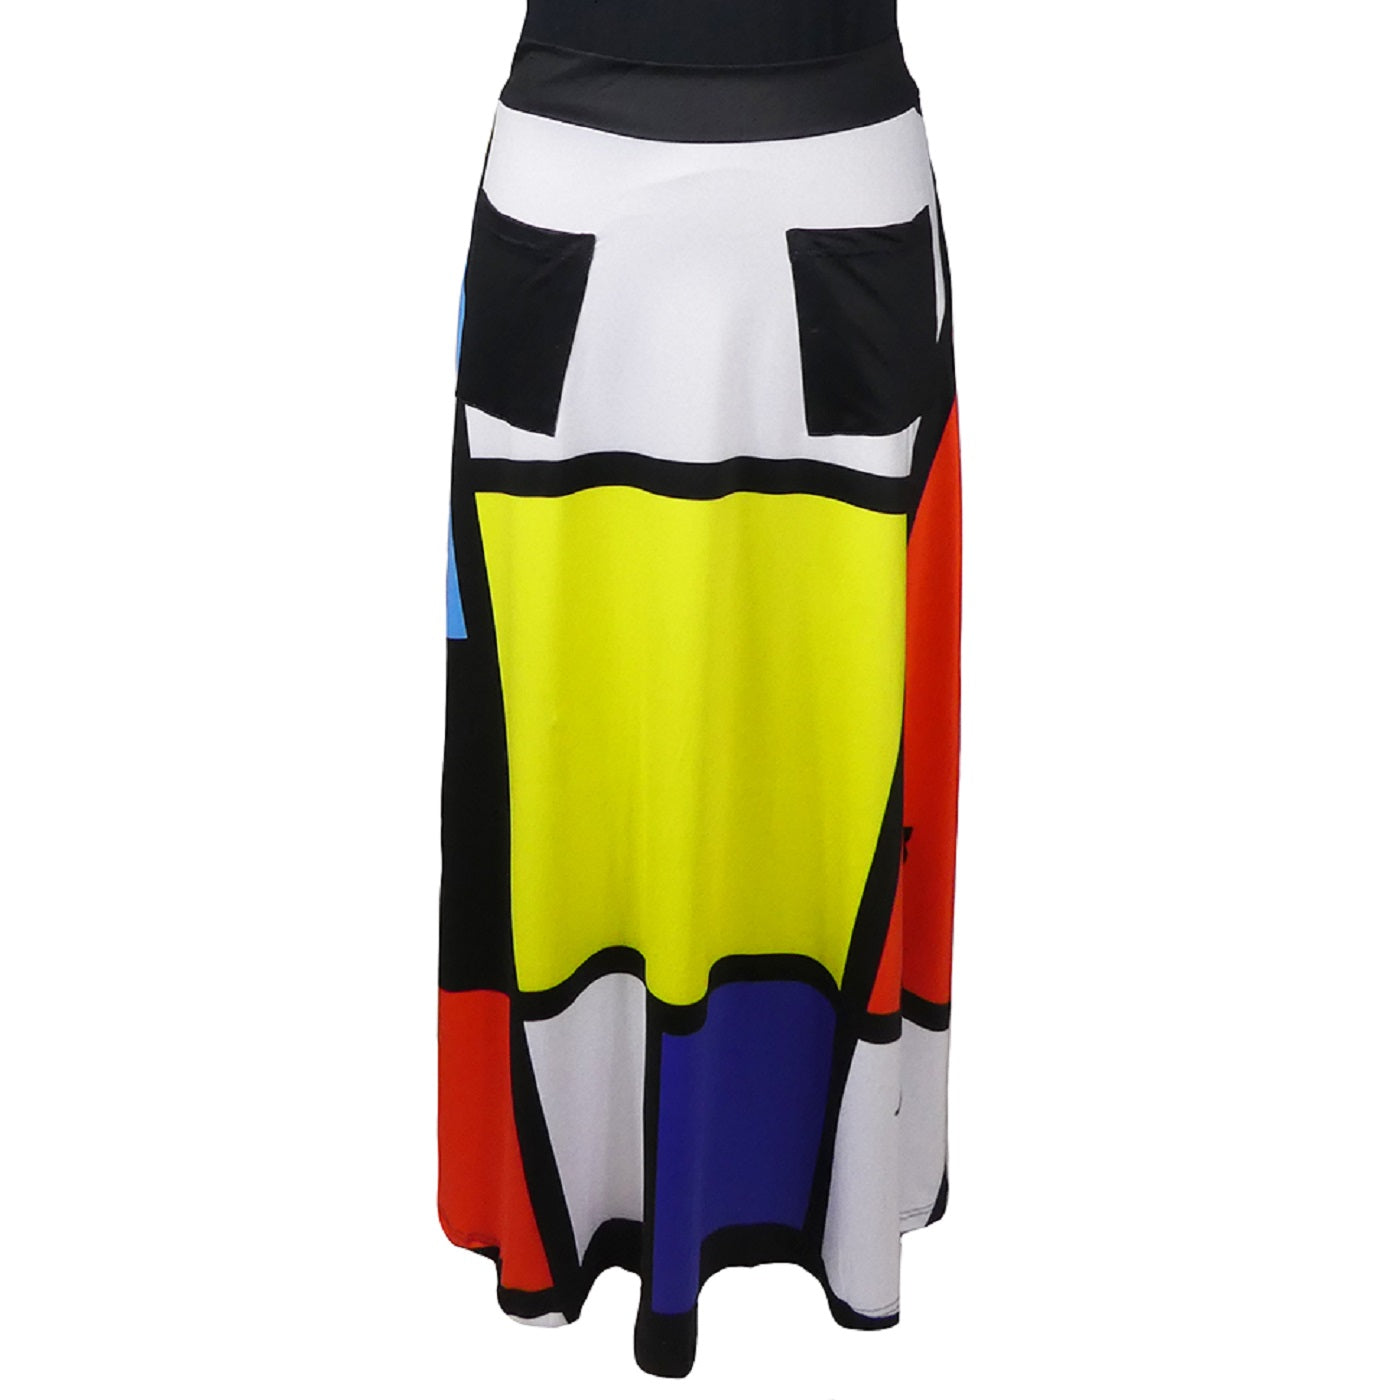 Intrigue Maxi Skirt by RainbowsAndFairies.com.au (Black Cats - Mondrian Art - Check Print - Skirt With Pockets - Boho - Mod Retro - Vintage Inspired) - SKU: CL_MAXIS_INTRG_ORG - Pic-02